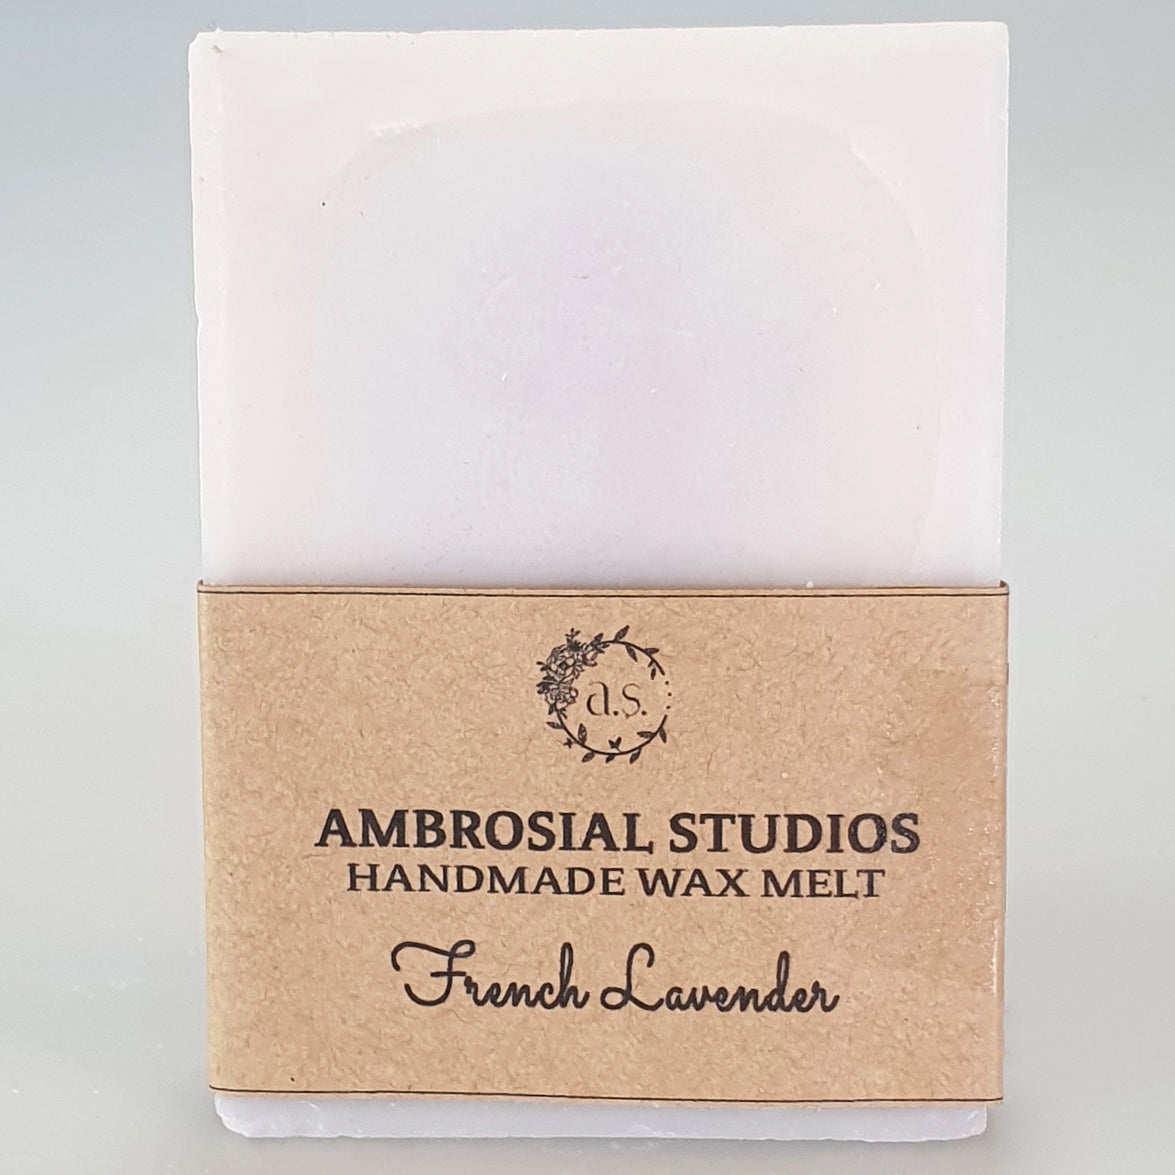 Ambrosial Studios - Handmade Wax Melt - French Lavender